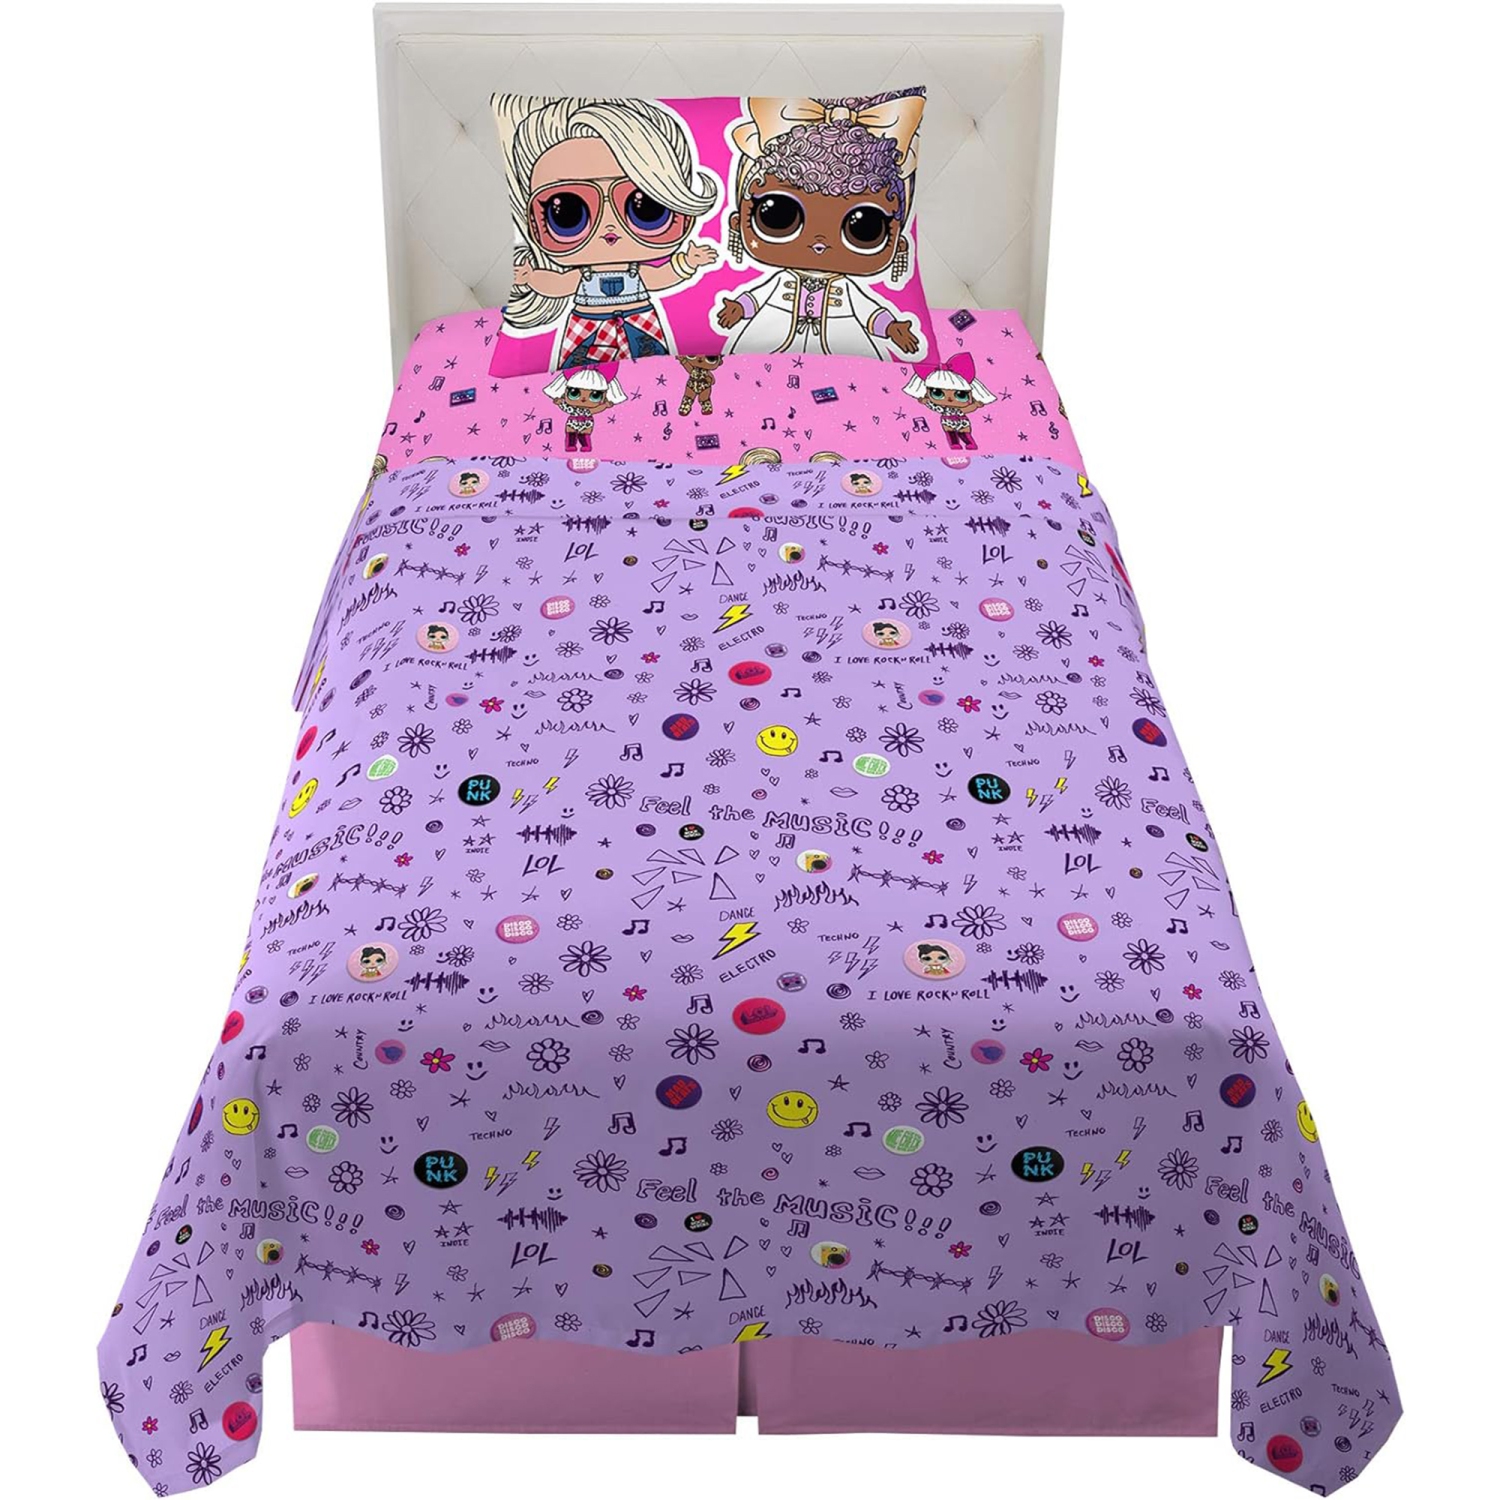 LOL Surprise 3 Piece Twin Bedding Soft Microfiber Sheet Set for Kids